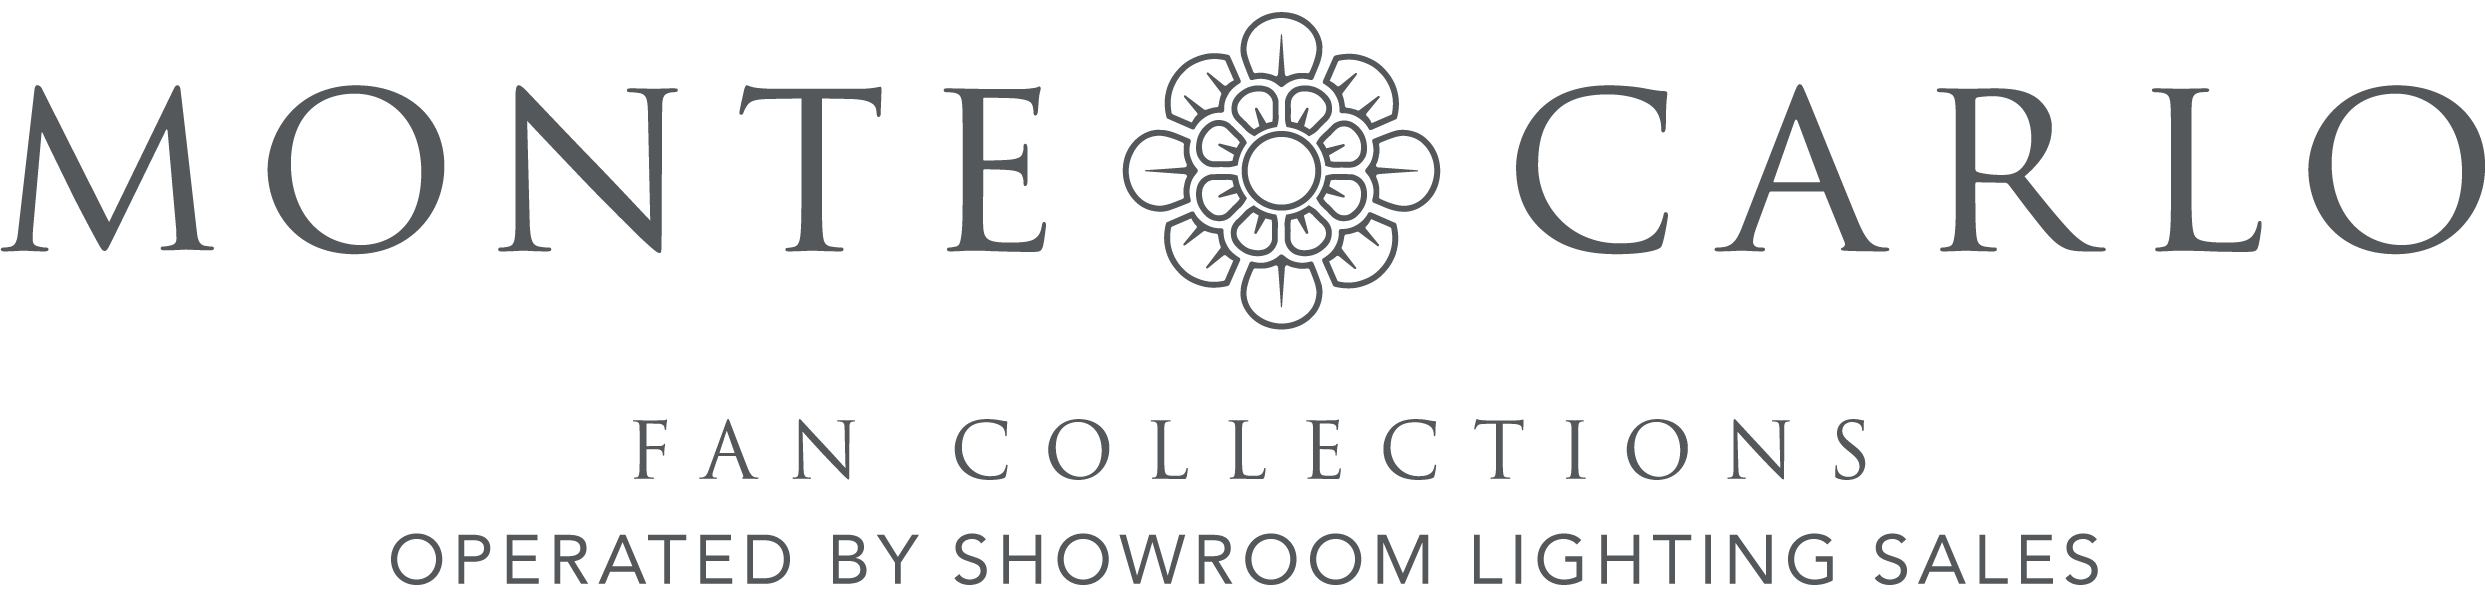 Monte Carlo Fan Collections Logo